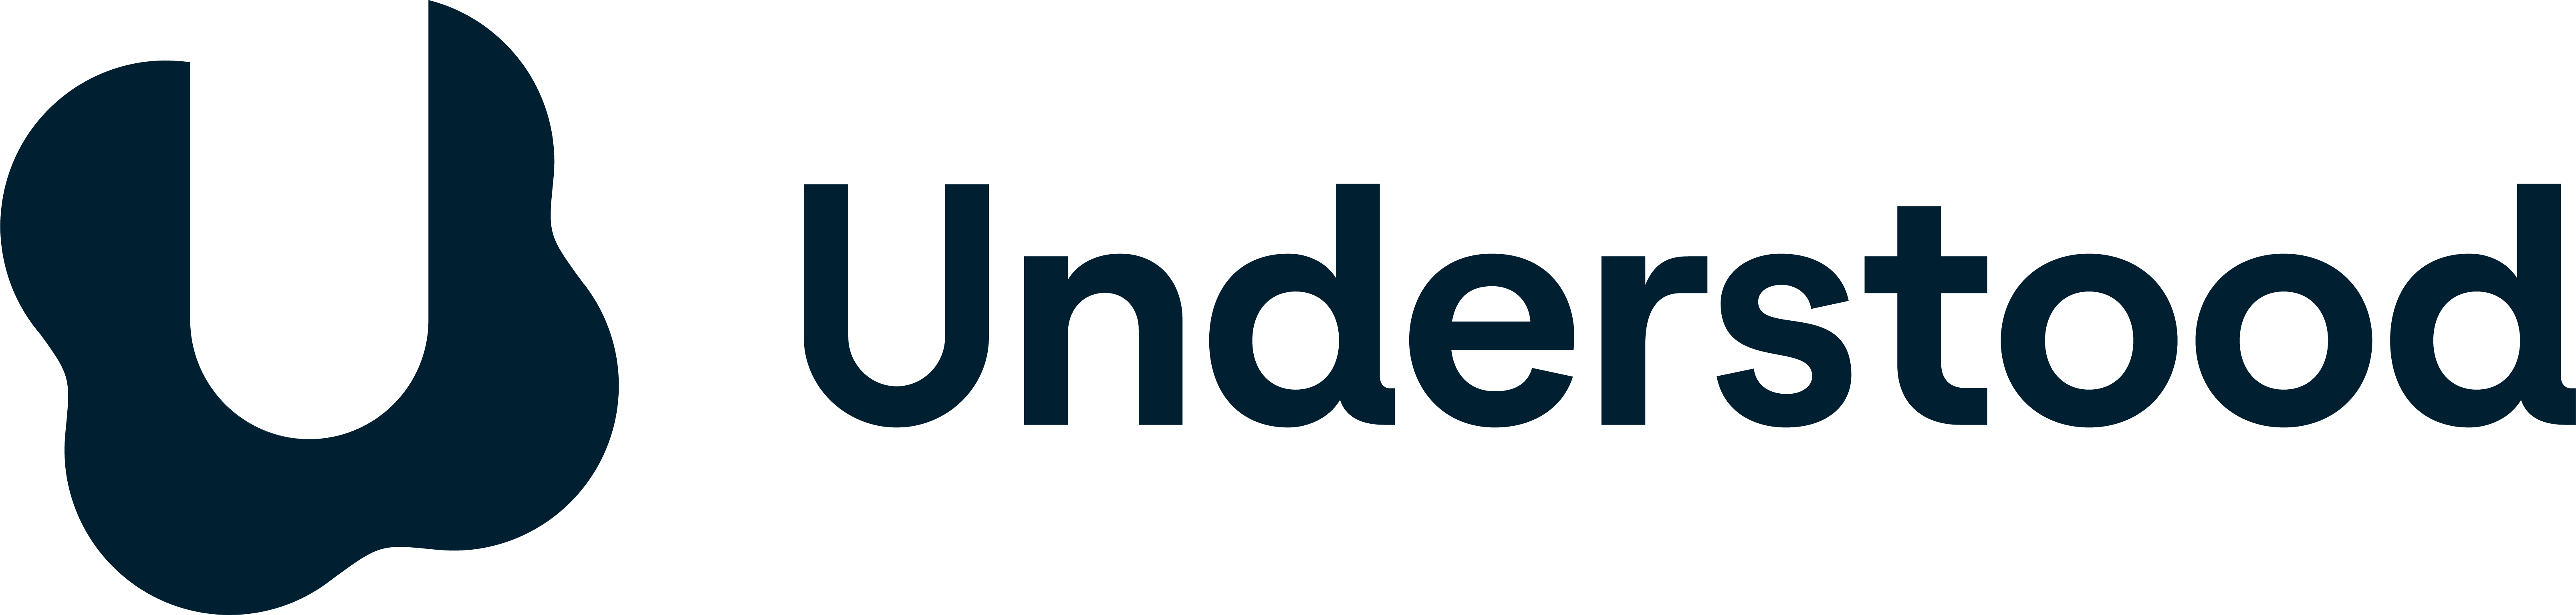 Understood logo